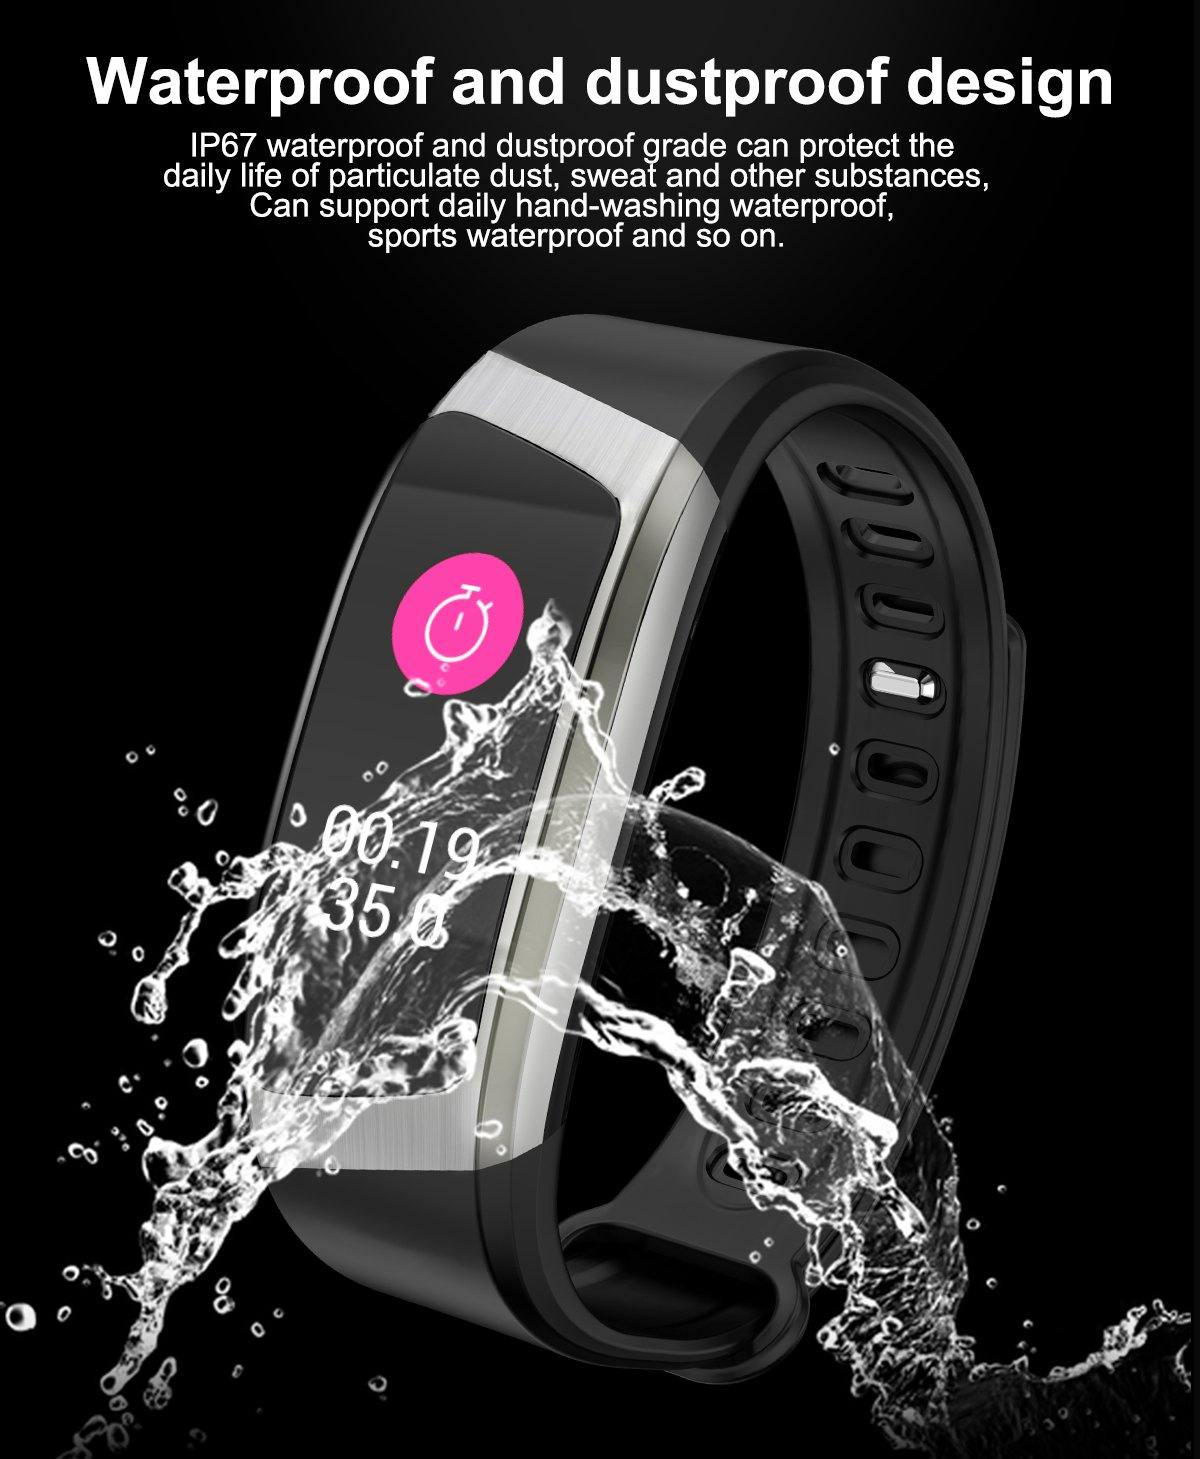 E18 Fitness Tracker Heart Rate Monitor Blood Pressure Sleep Calorie Pedometer Watch Waterproof Activity Tracker for Men Women - Findtime